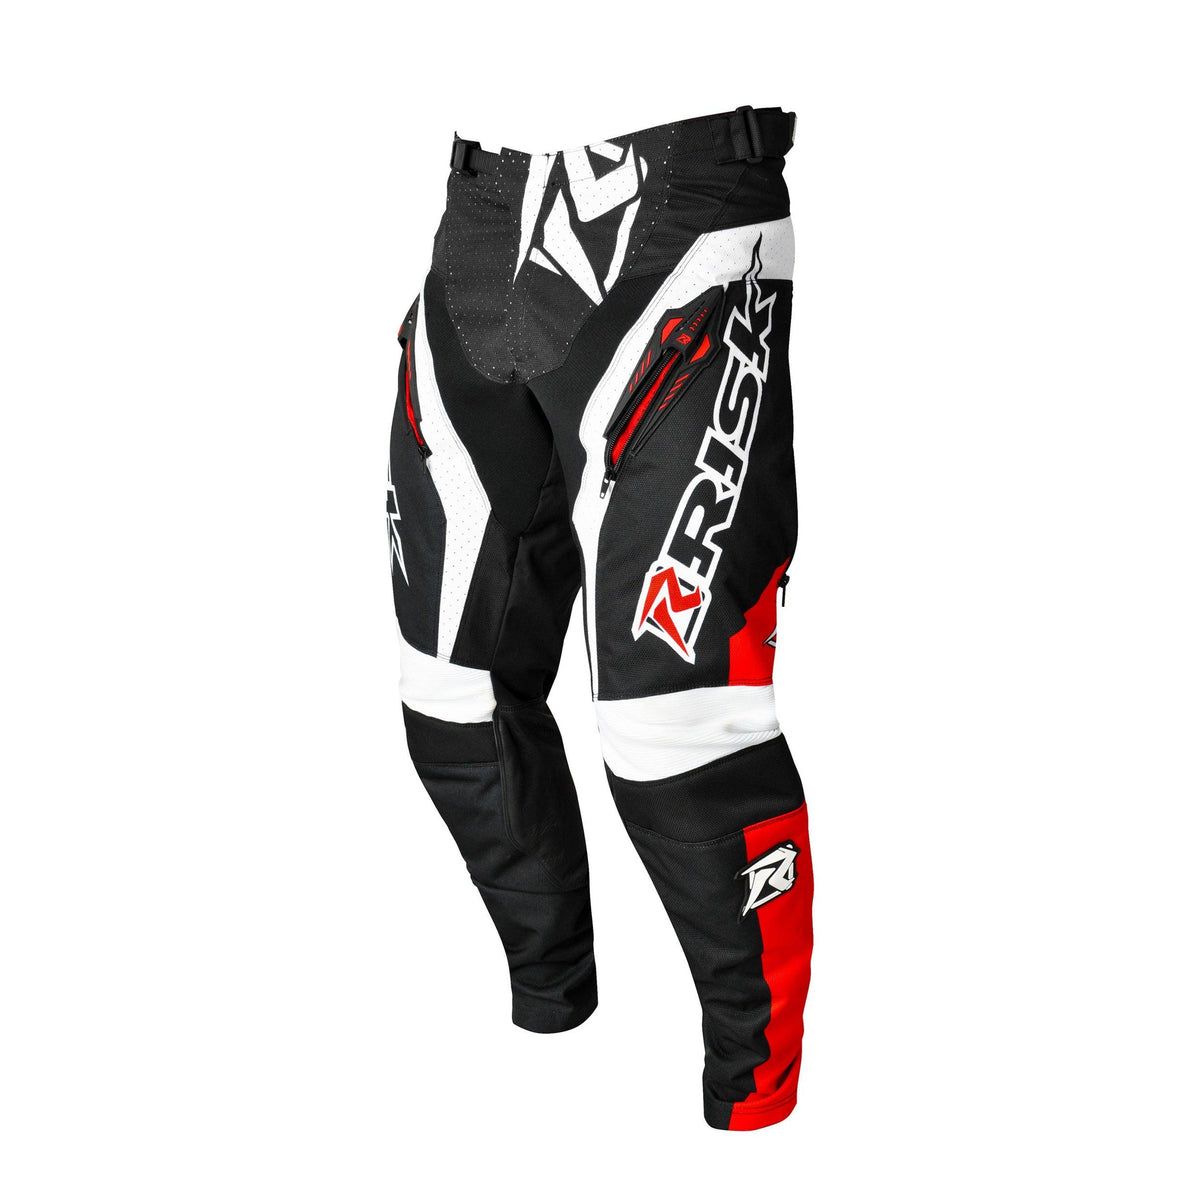 Risk Racing VENTilate V2 Motocross Pants - Dirt Bike Pants